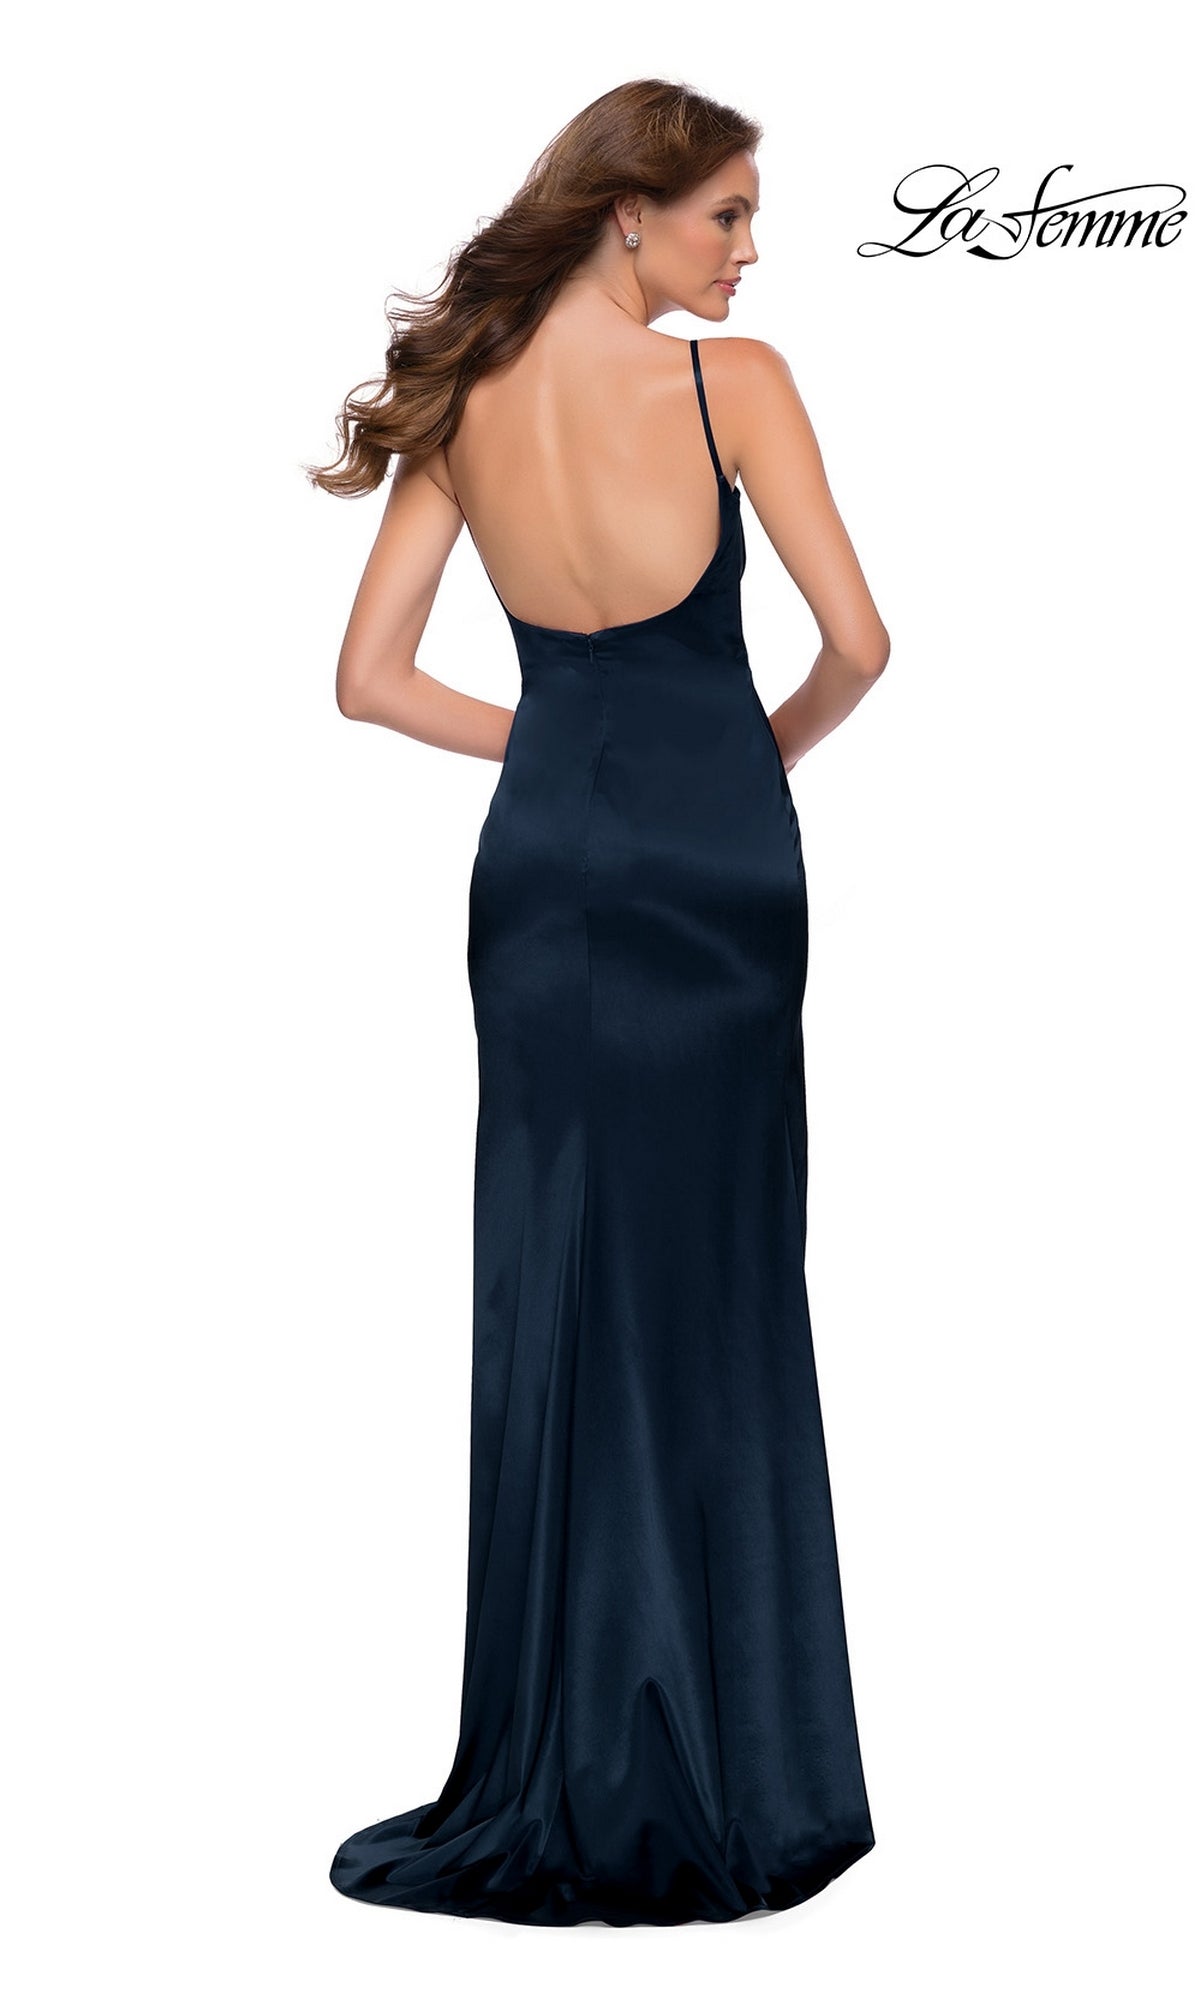  La Femme 29945 Formal Prom Dress